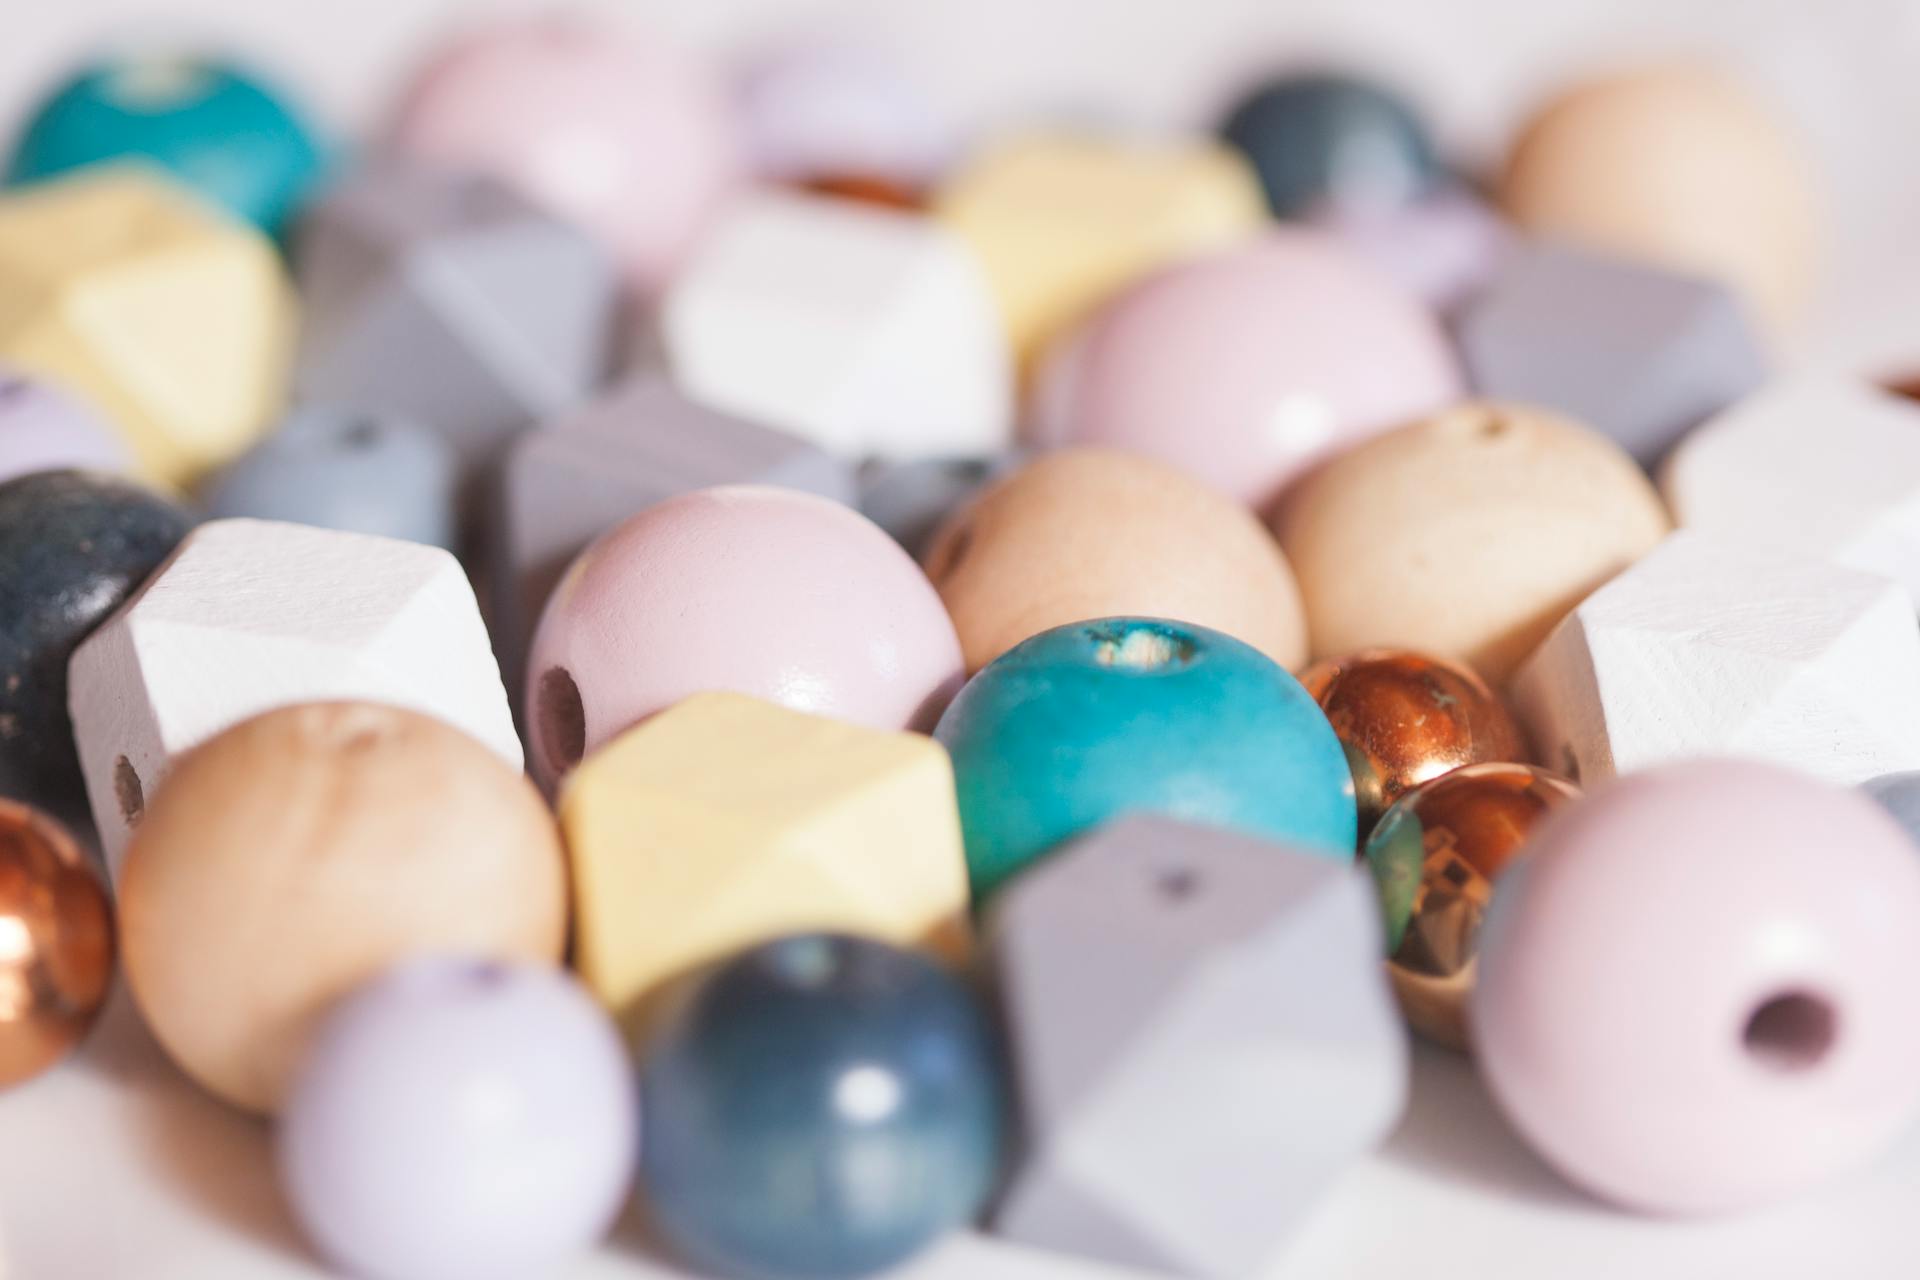 Perles assorties | Source : Pexels